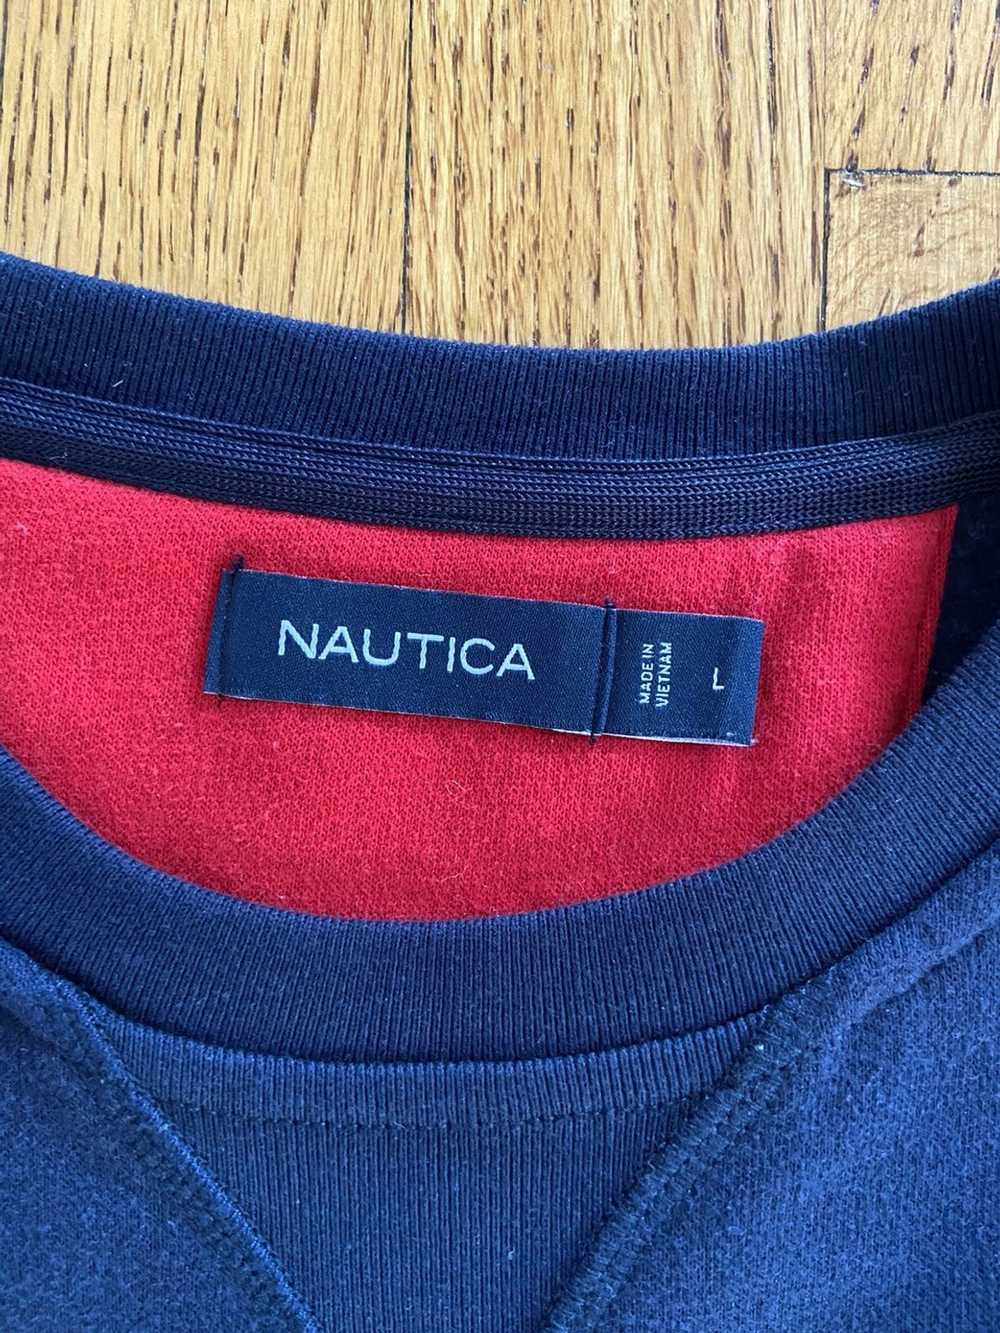 Nautica × Vintage Vintage Nautica Crewneck Sweater - image 3